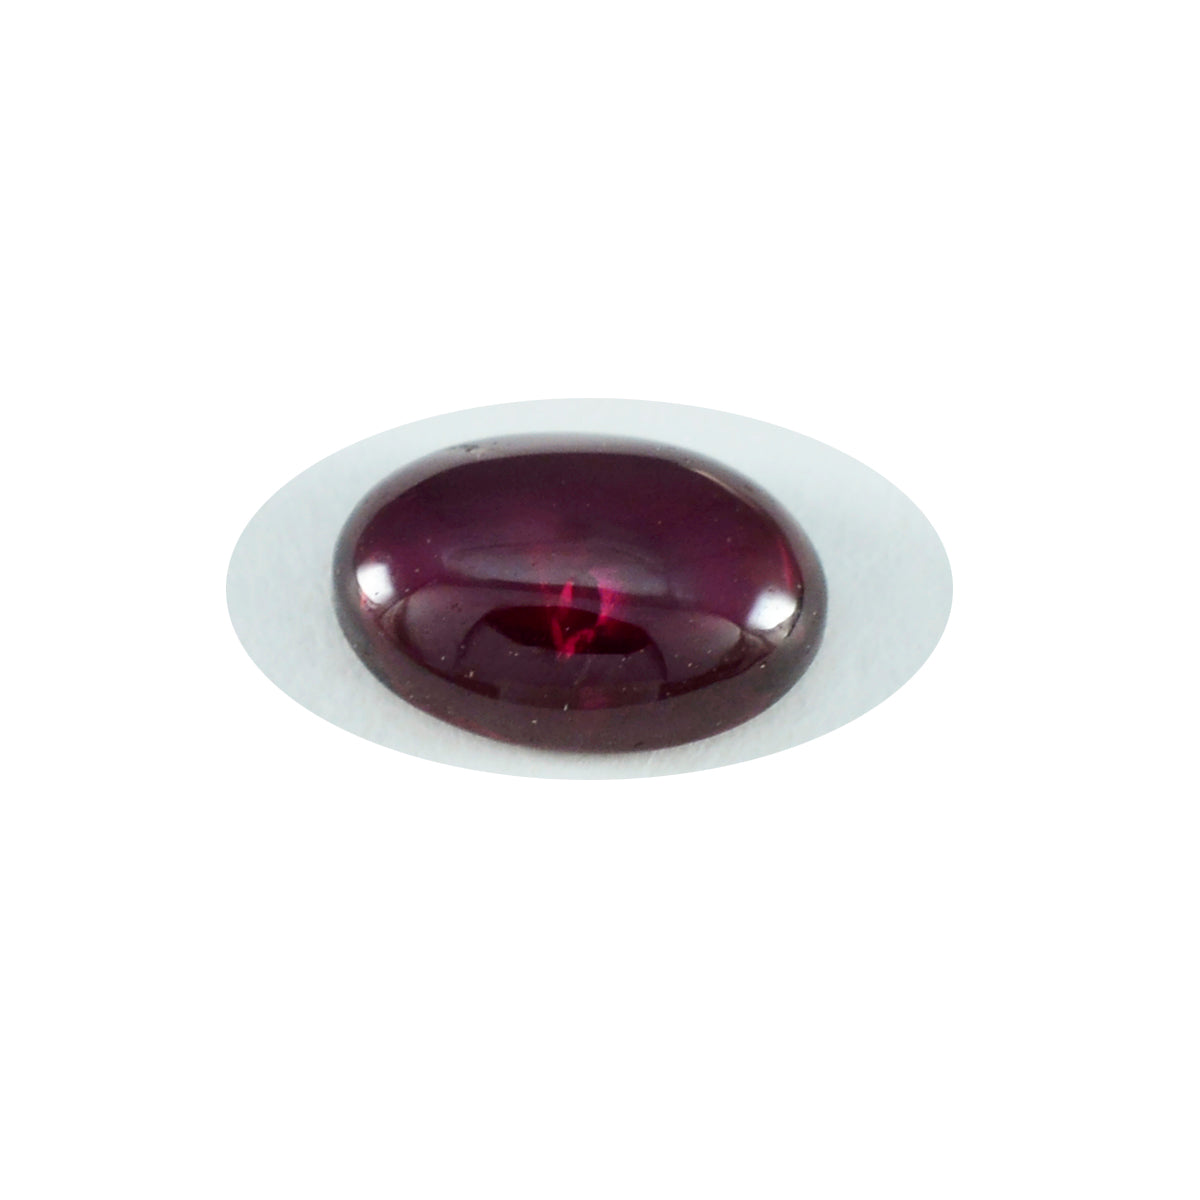 Riyogems 1PC rode granaat cabochon 9x11 mm ovale vorm uitstekende kwaliteit edelstenen